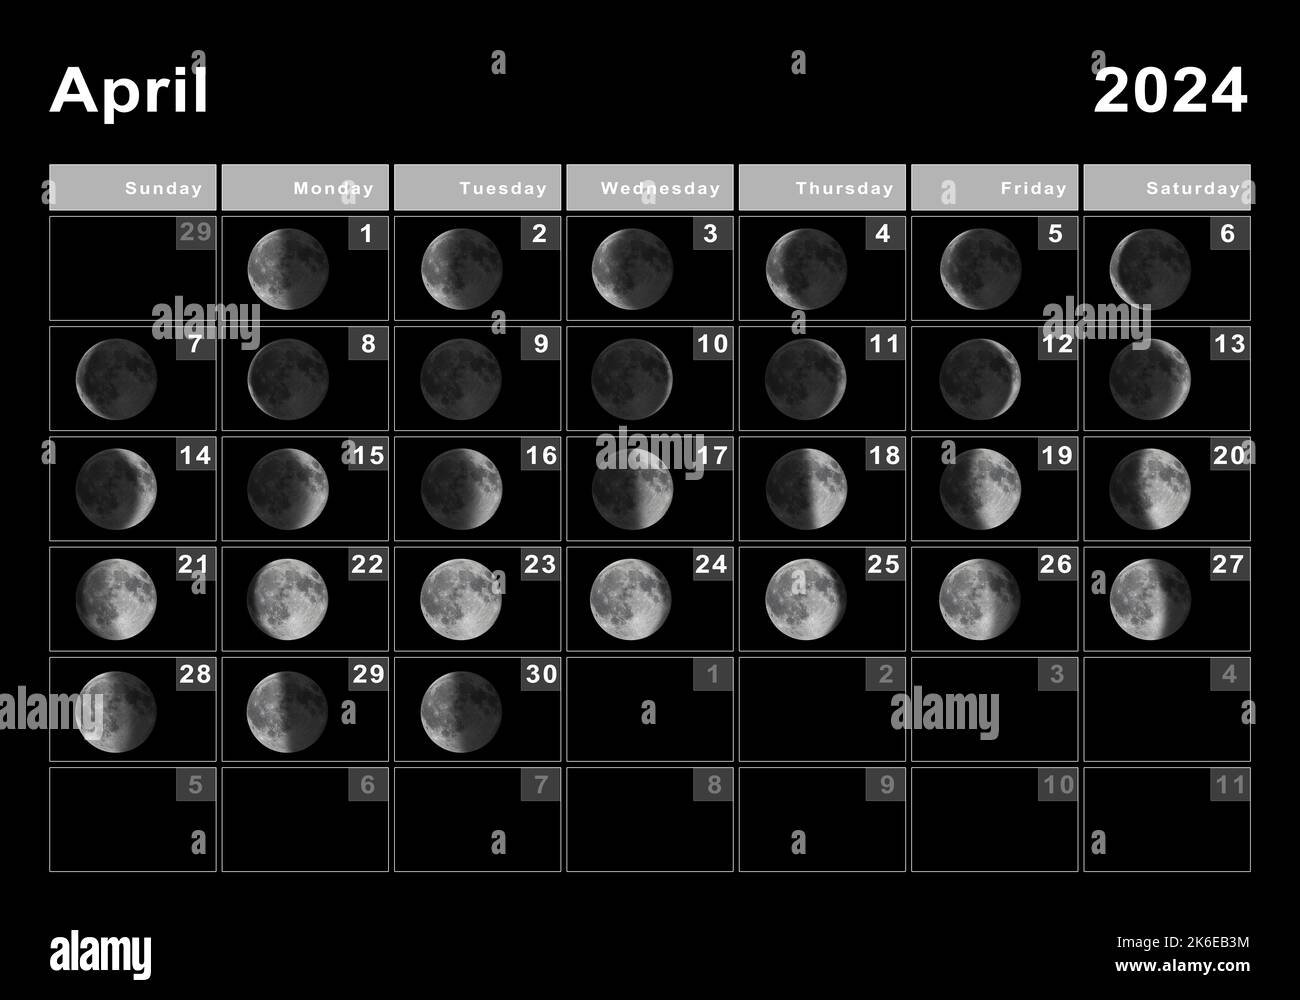 April 2024 Lunar Calendar, Moon Cycles, Moon Phases Stock Photo in April 2024 Moon Calendar